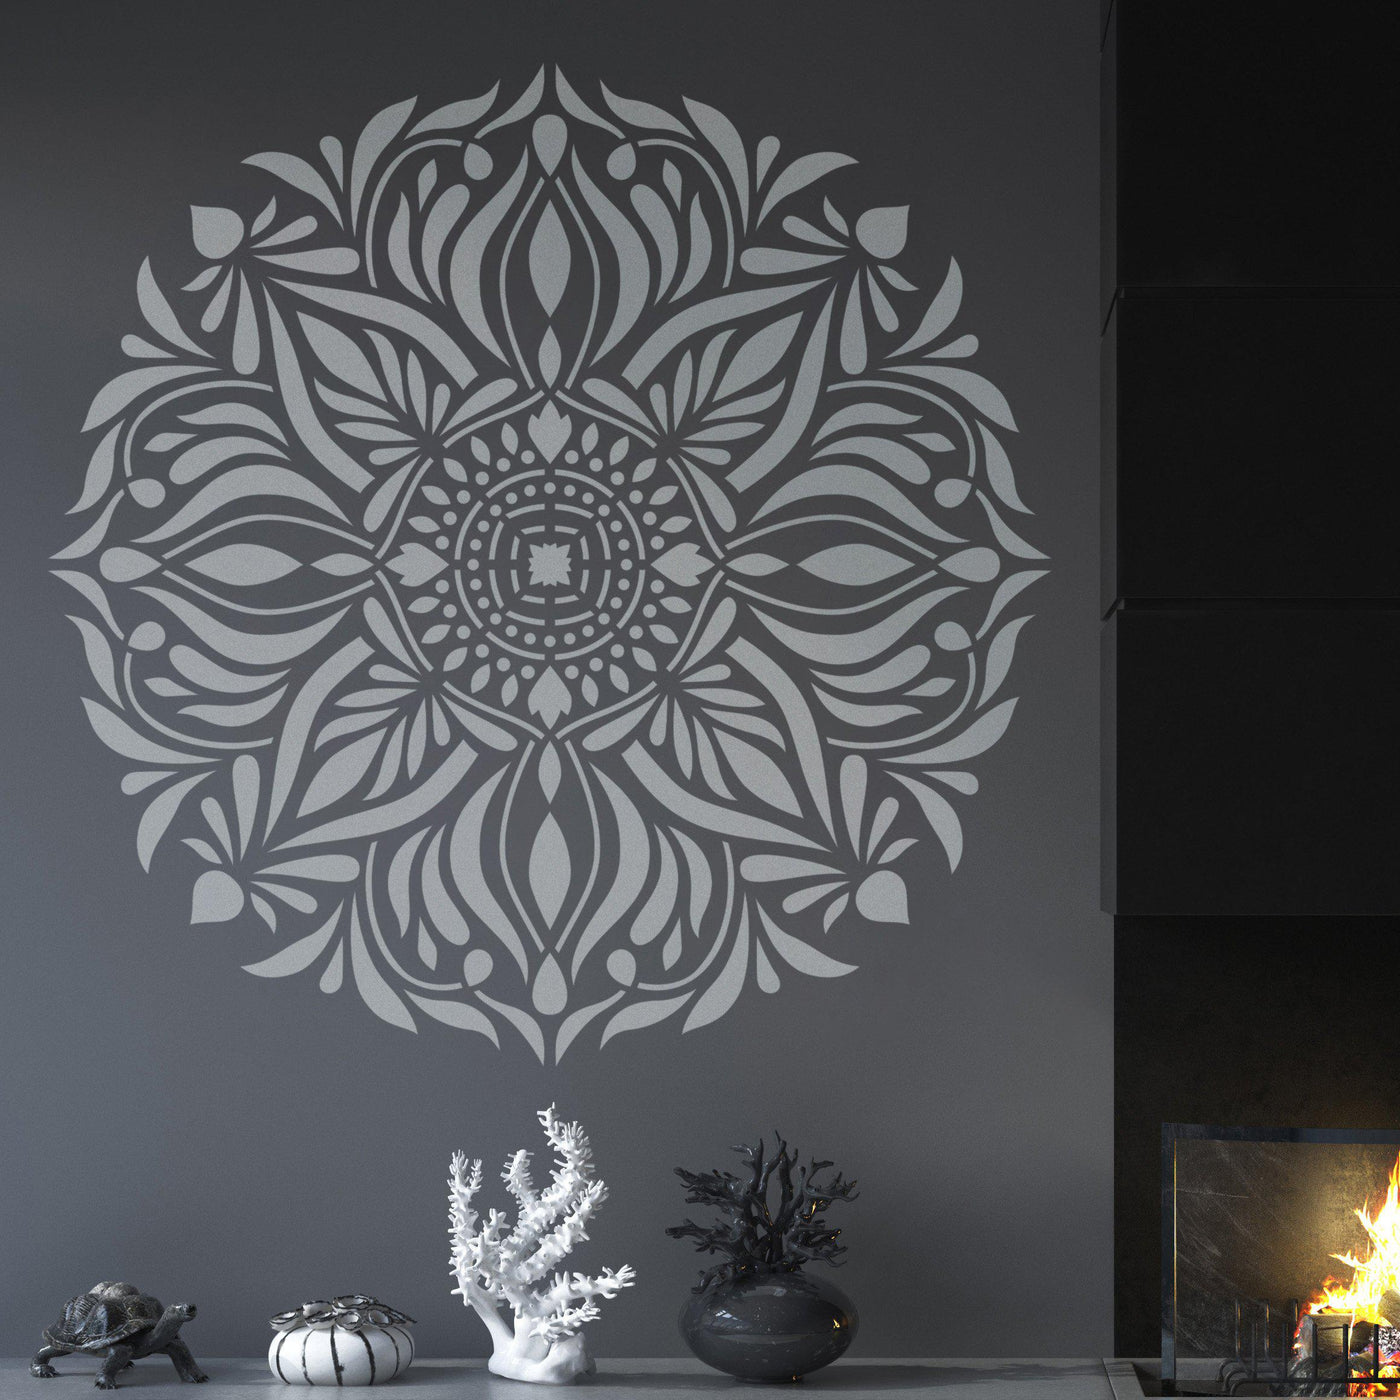 Mandala Large Walls Stencils Painting Furniture Decor Yoga